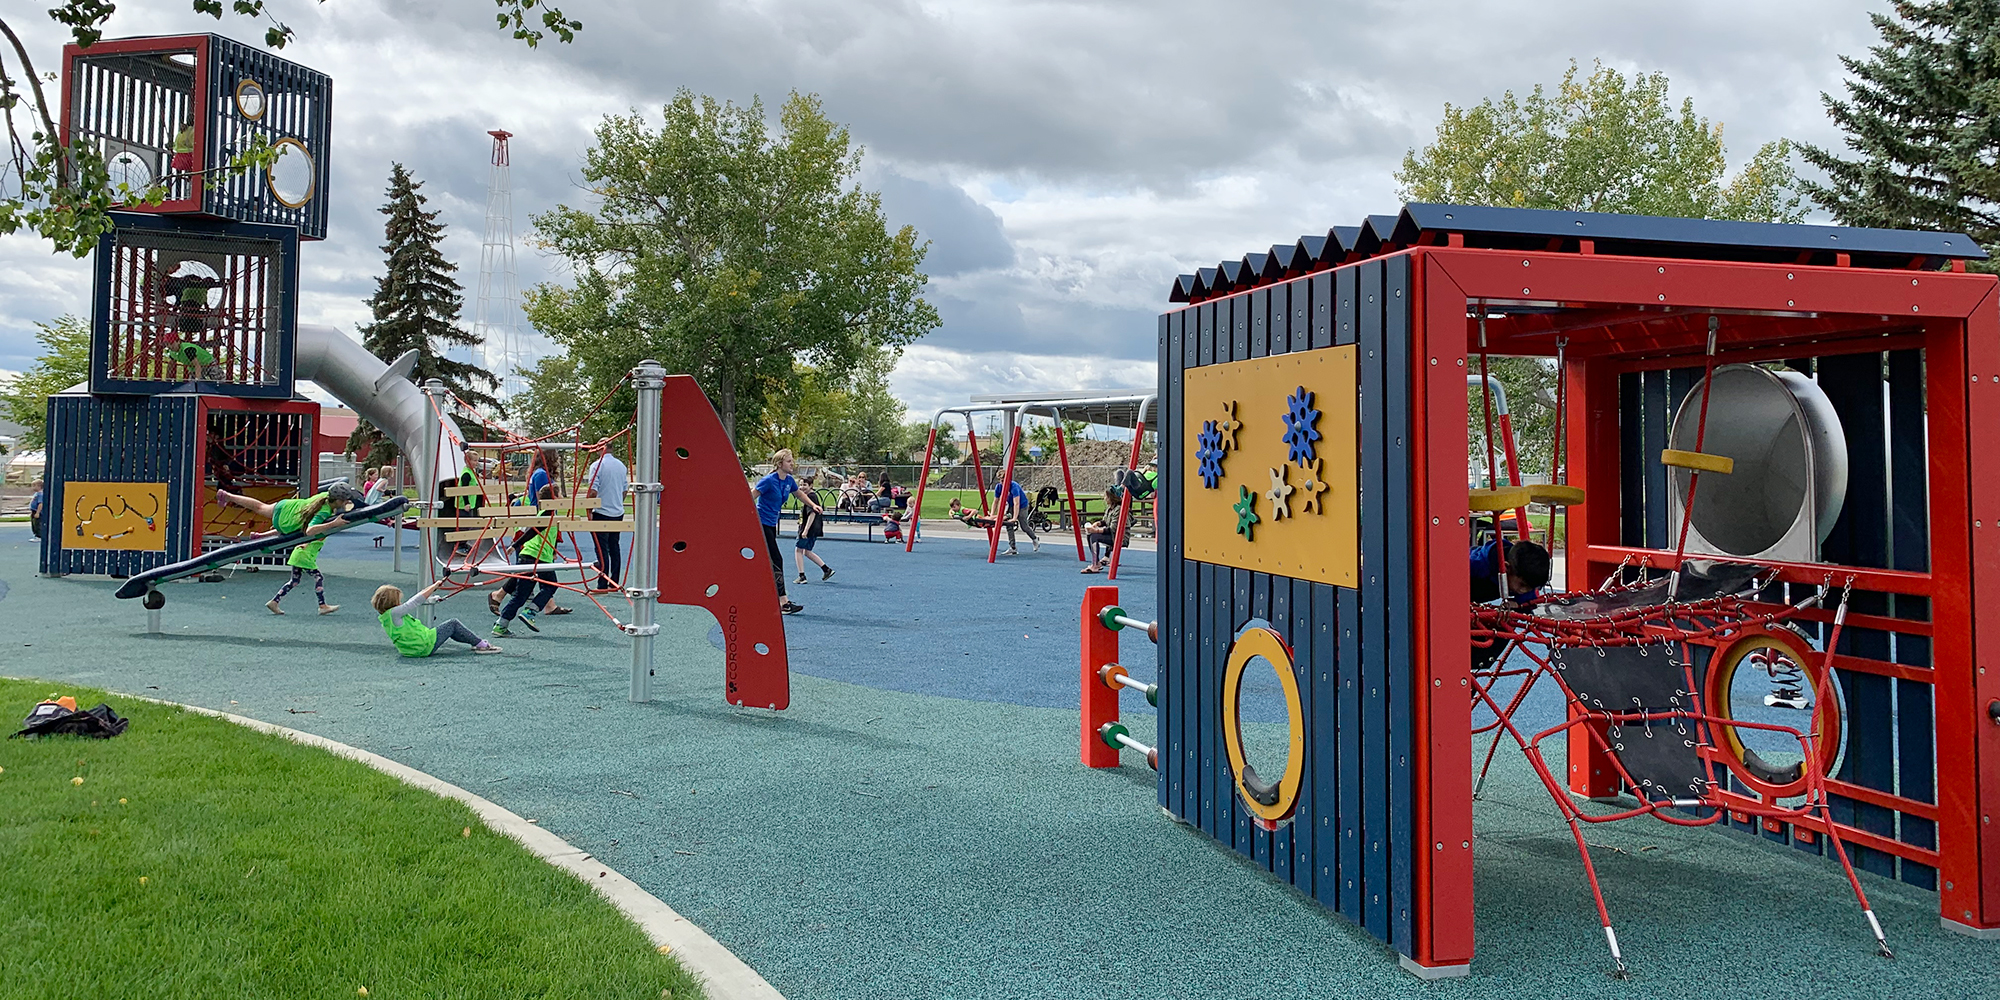 Outdoor play structure at Centennial Park